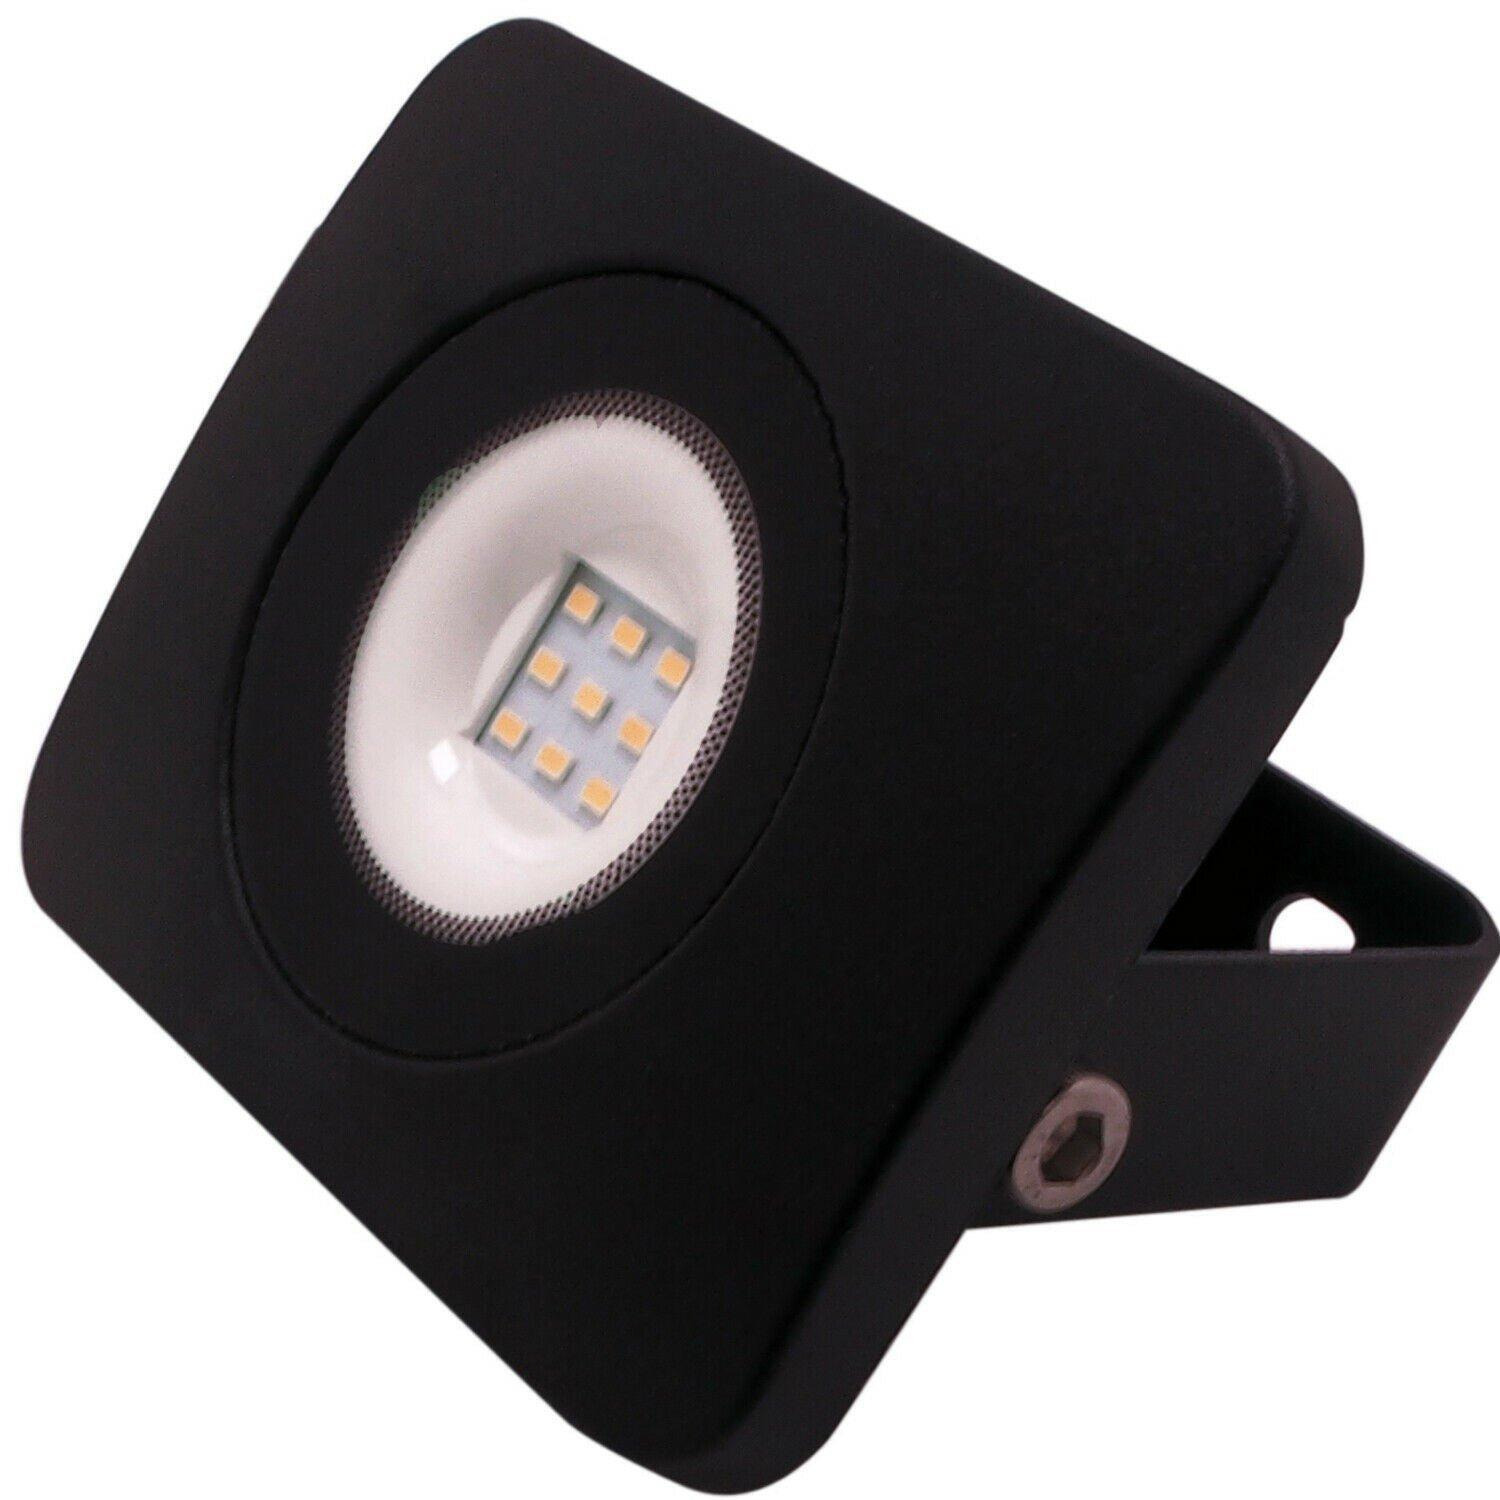 PREMIUM Slim Outdoor 20W LED Floodlight Bright Security IP65 Waterproof Light - image 1